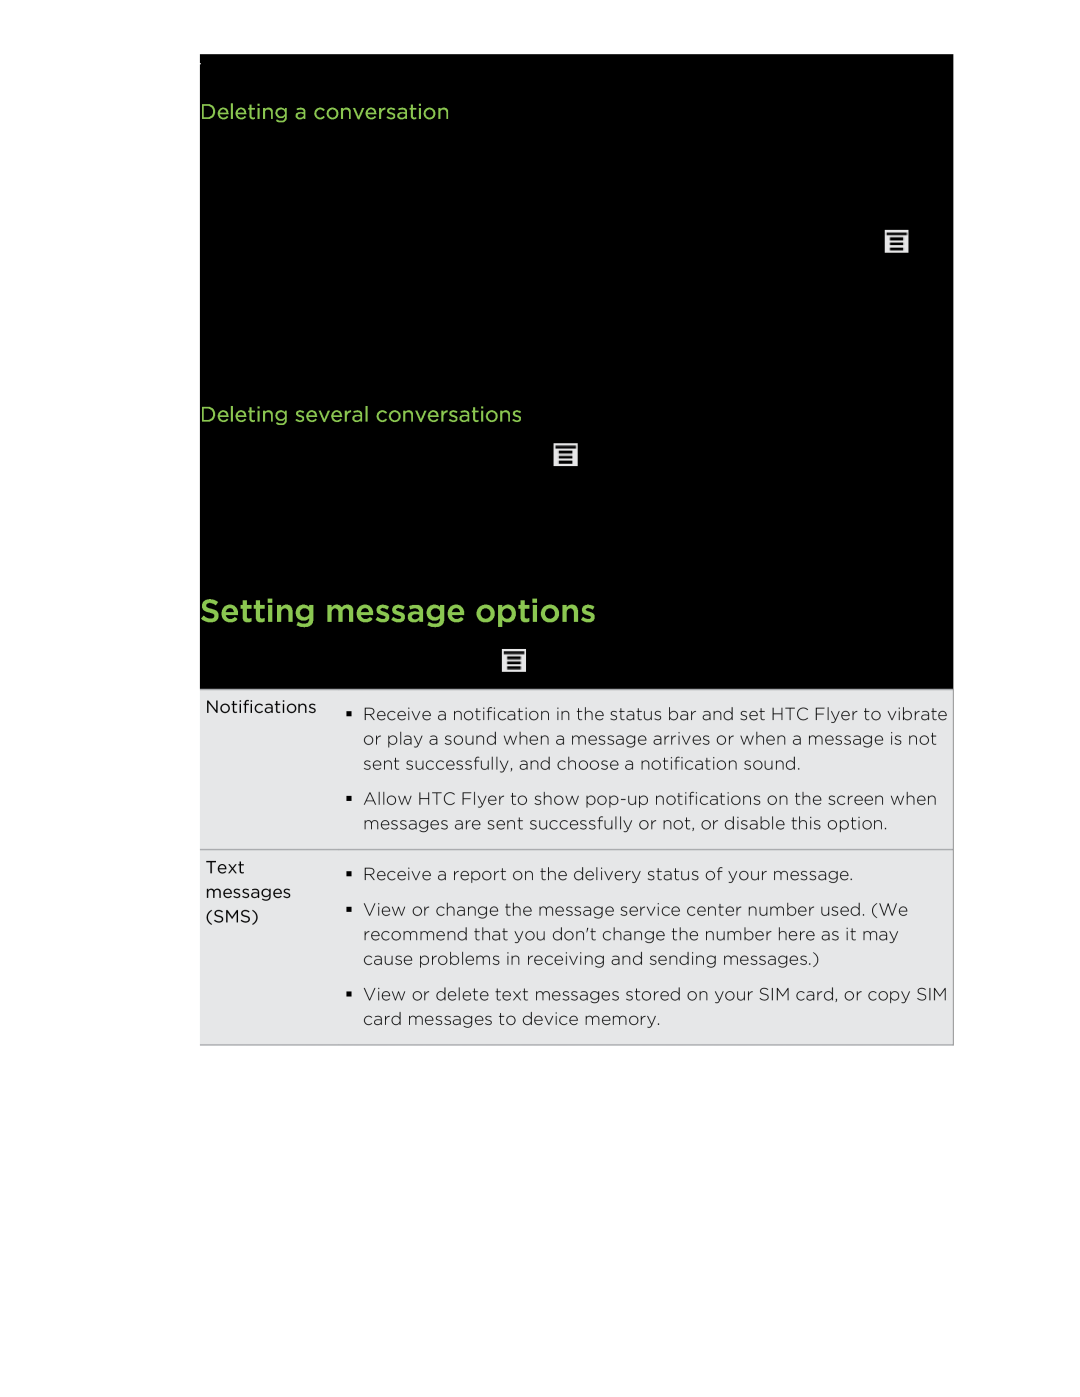 HTC HTCFlyerP512 manual Setting message options, Deleting a conversation, Deleting several conversations 